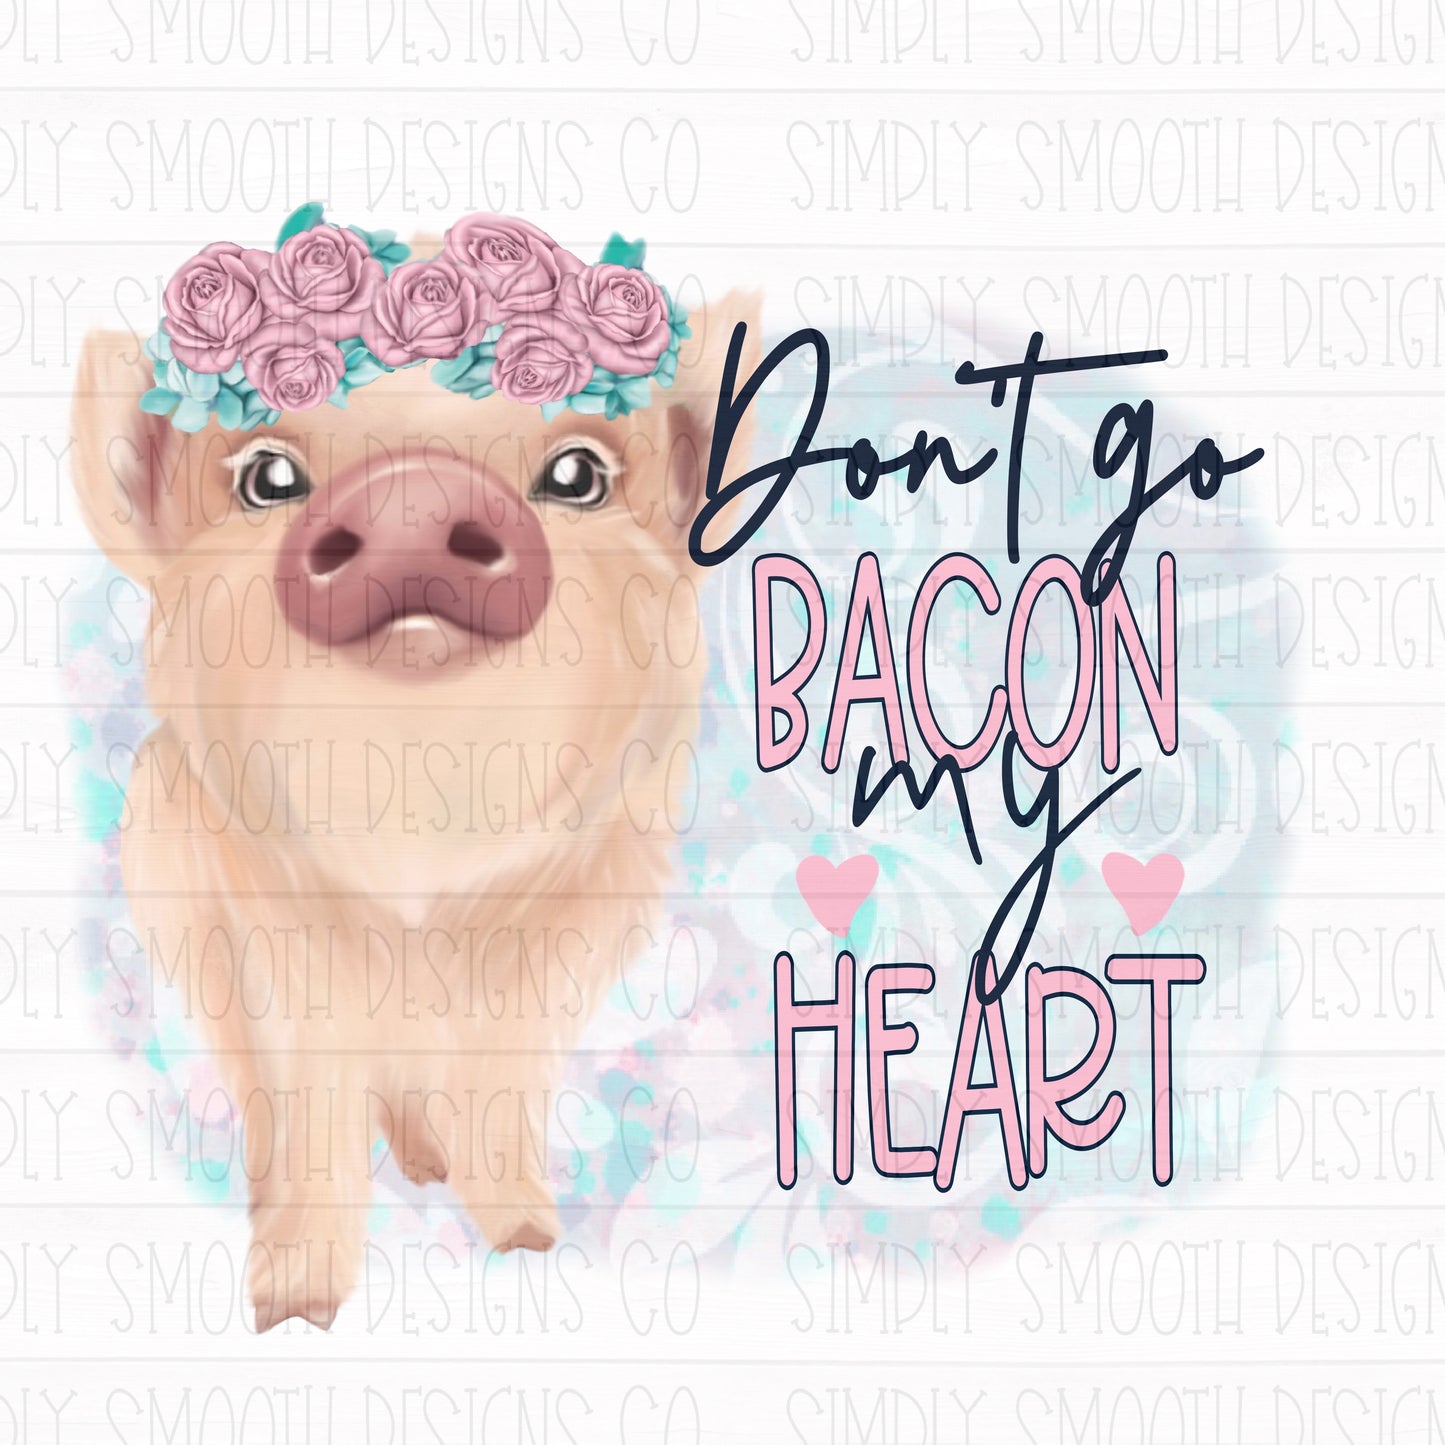 Don’t go bacon my heart pig